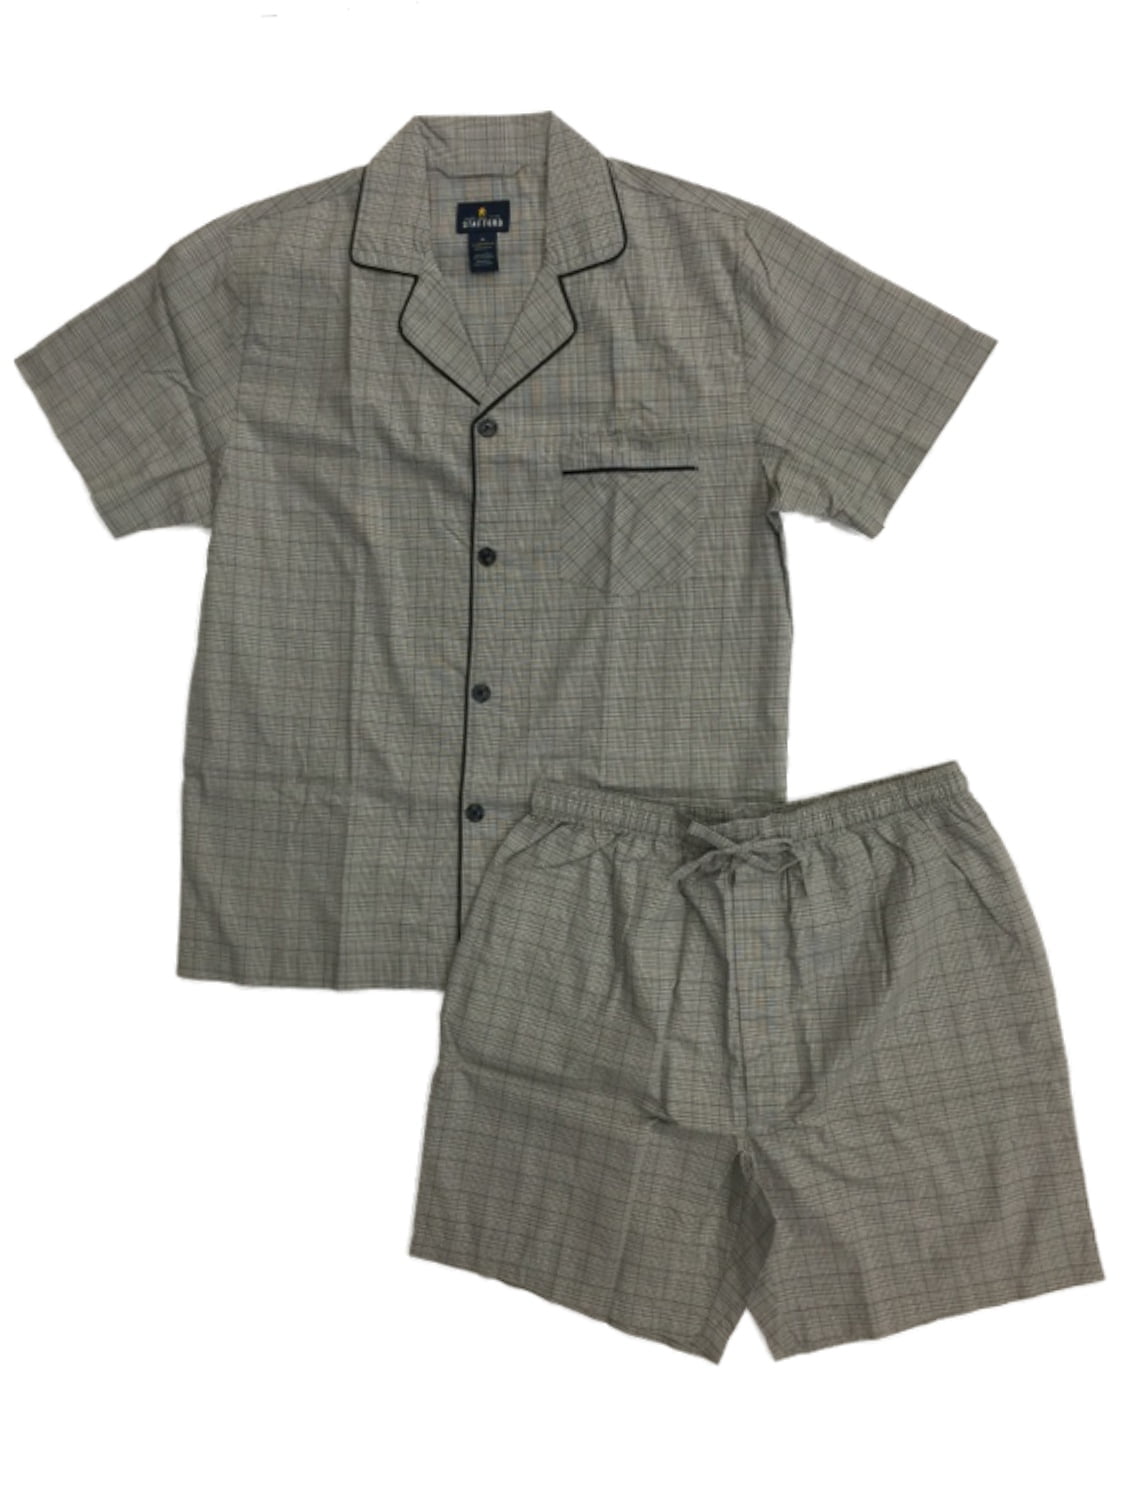 S-5XL 3 COLORS Hanes Men's Short Sleeve Pajama Set w/Woven Knit Pants 